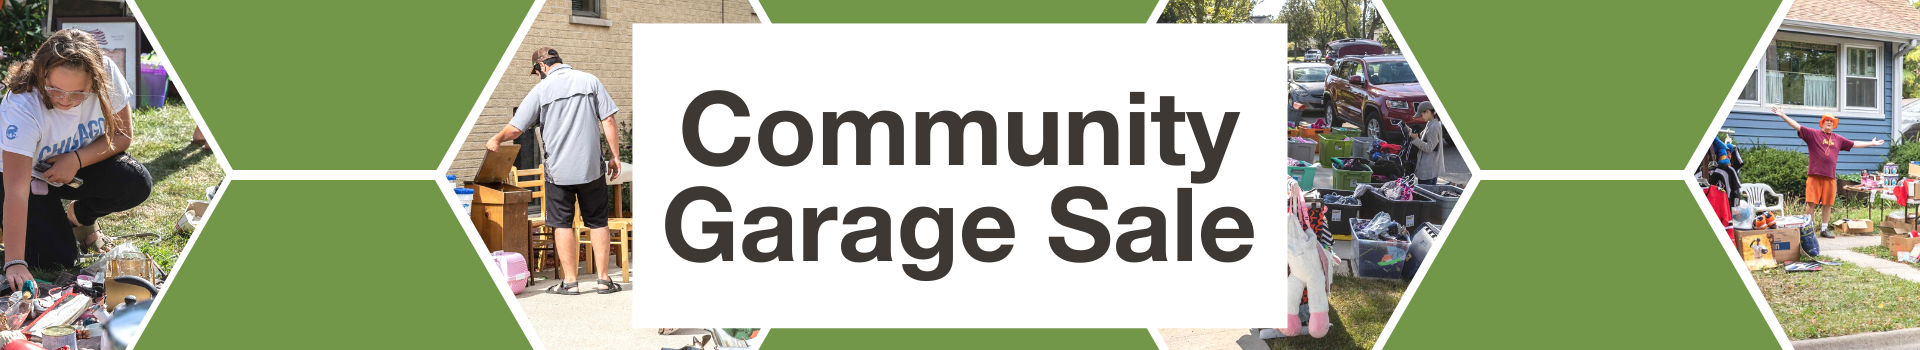 Community Garage Sale Page Banner